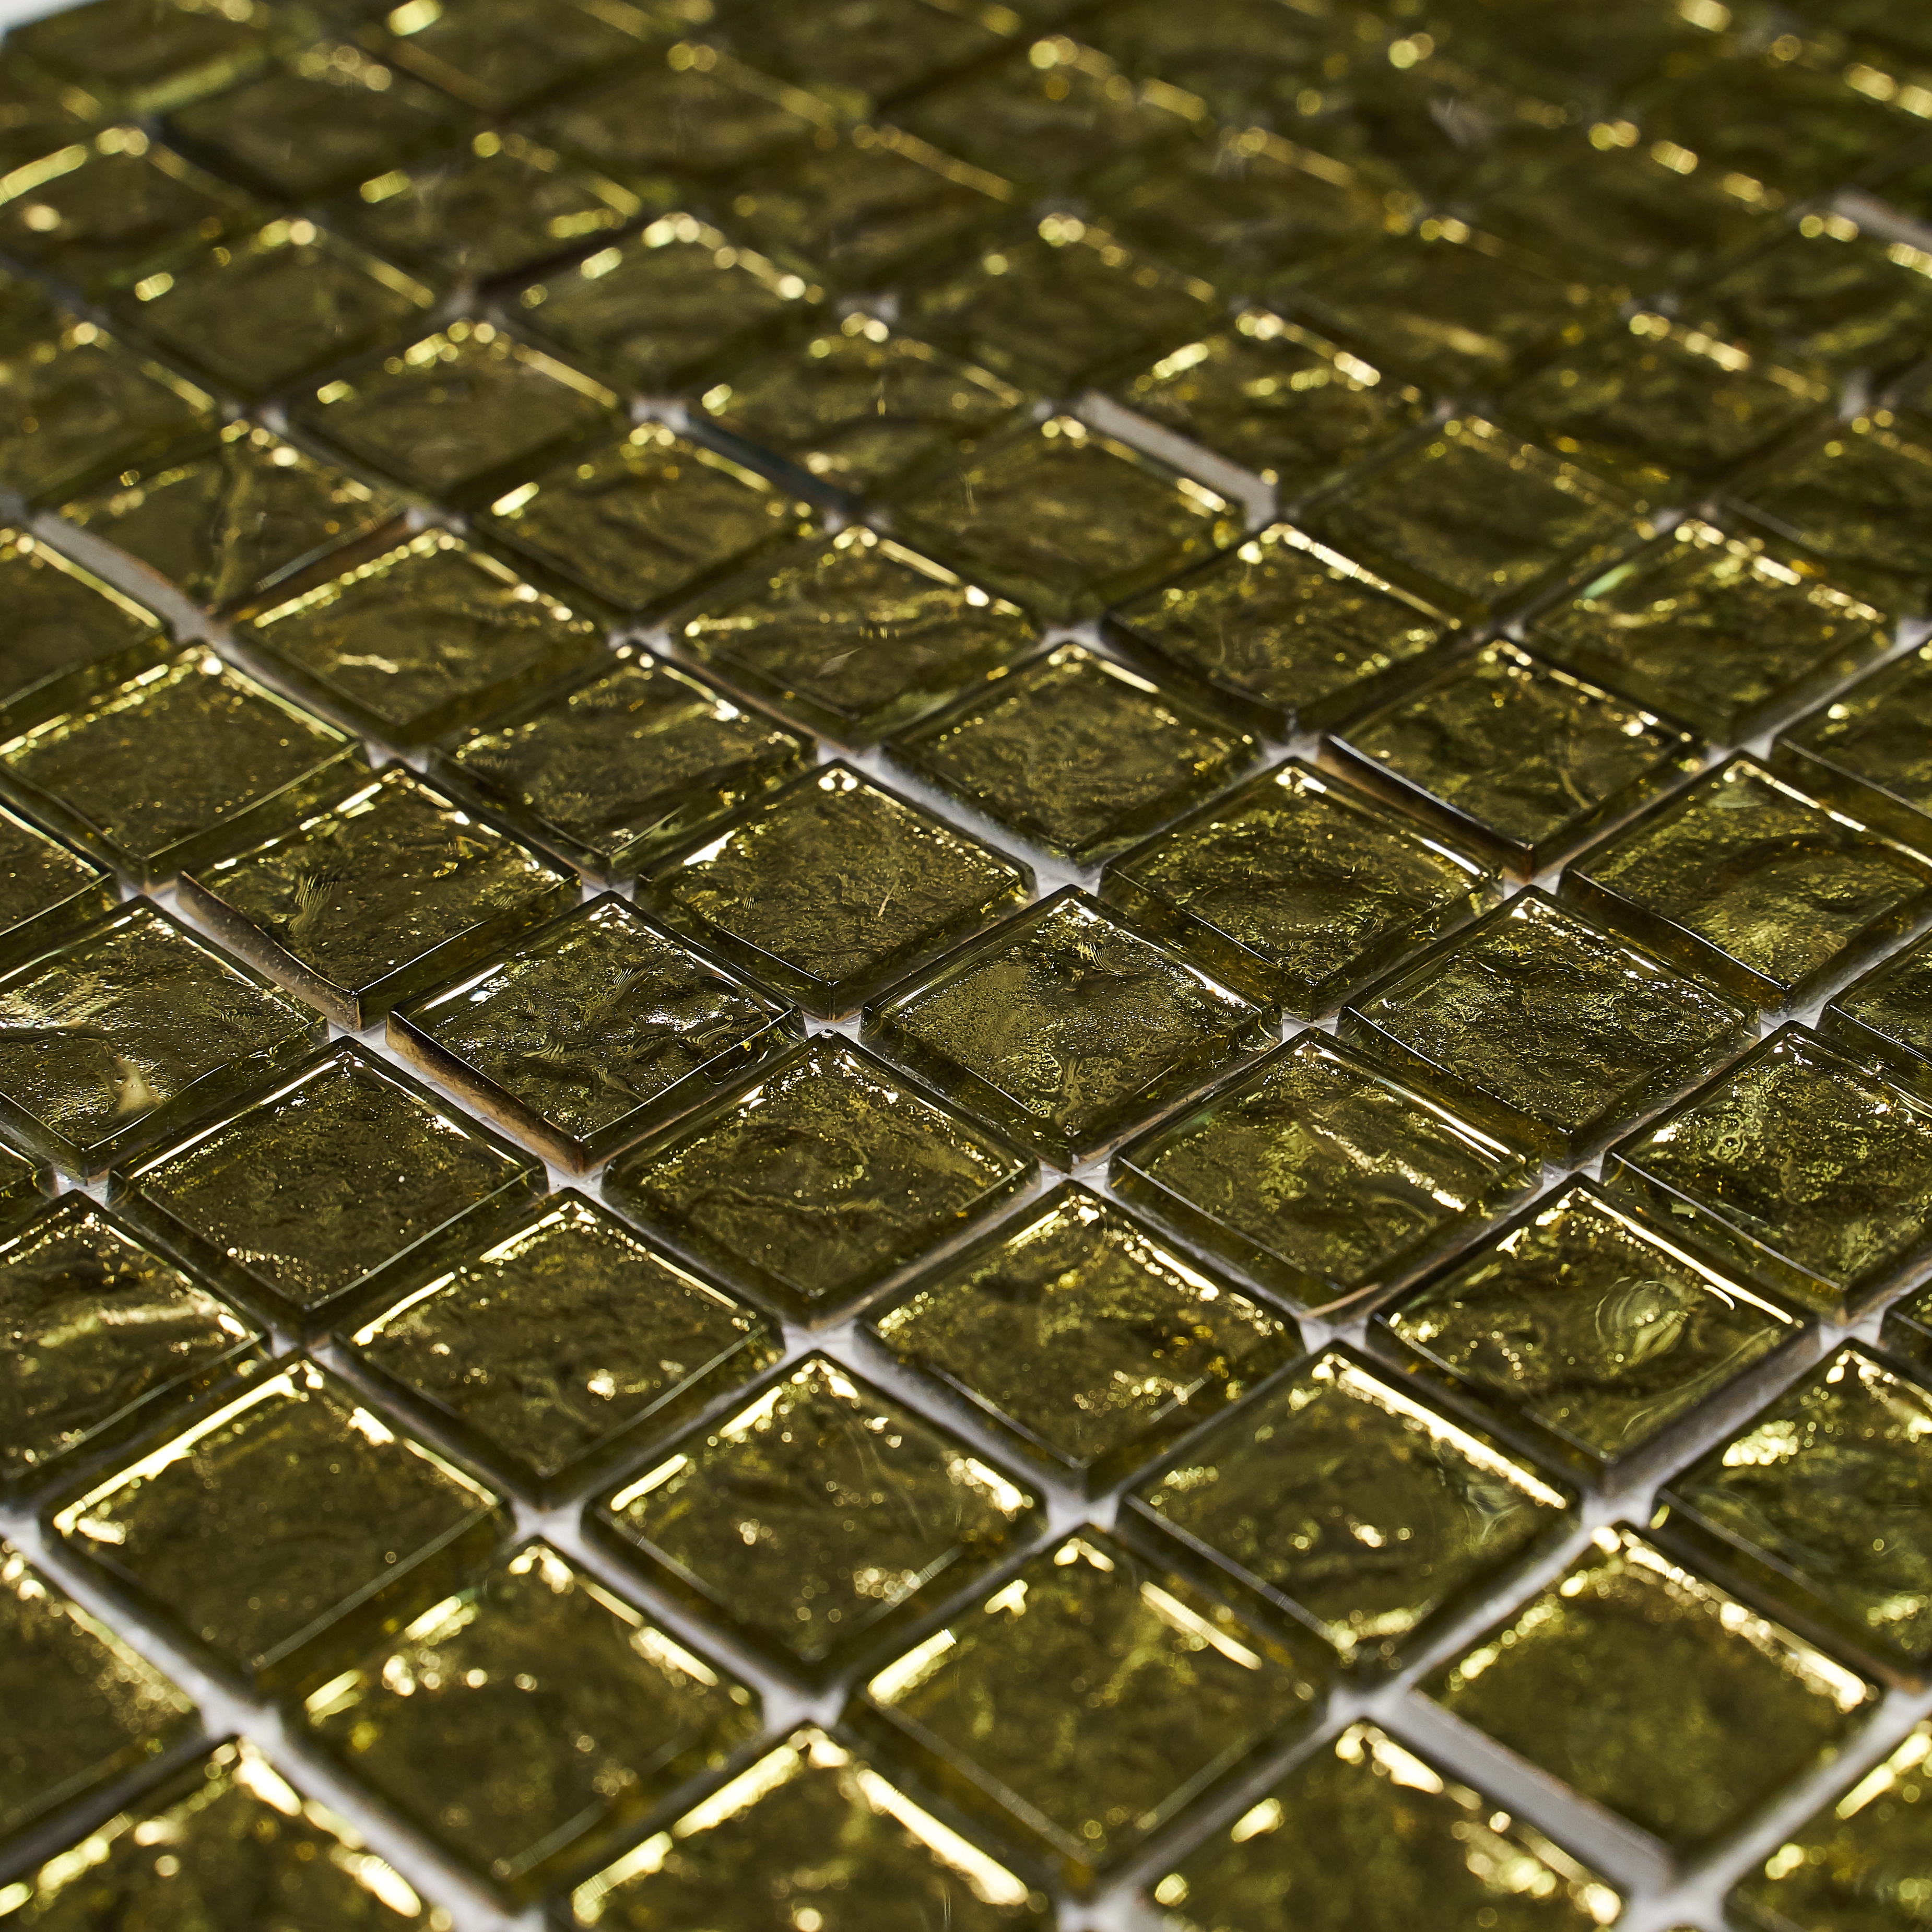 Мозаика Alchimia Golden Wave, 23х23х4 мм, MOSAICSTORY 30258